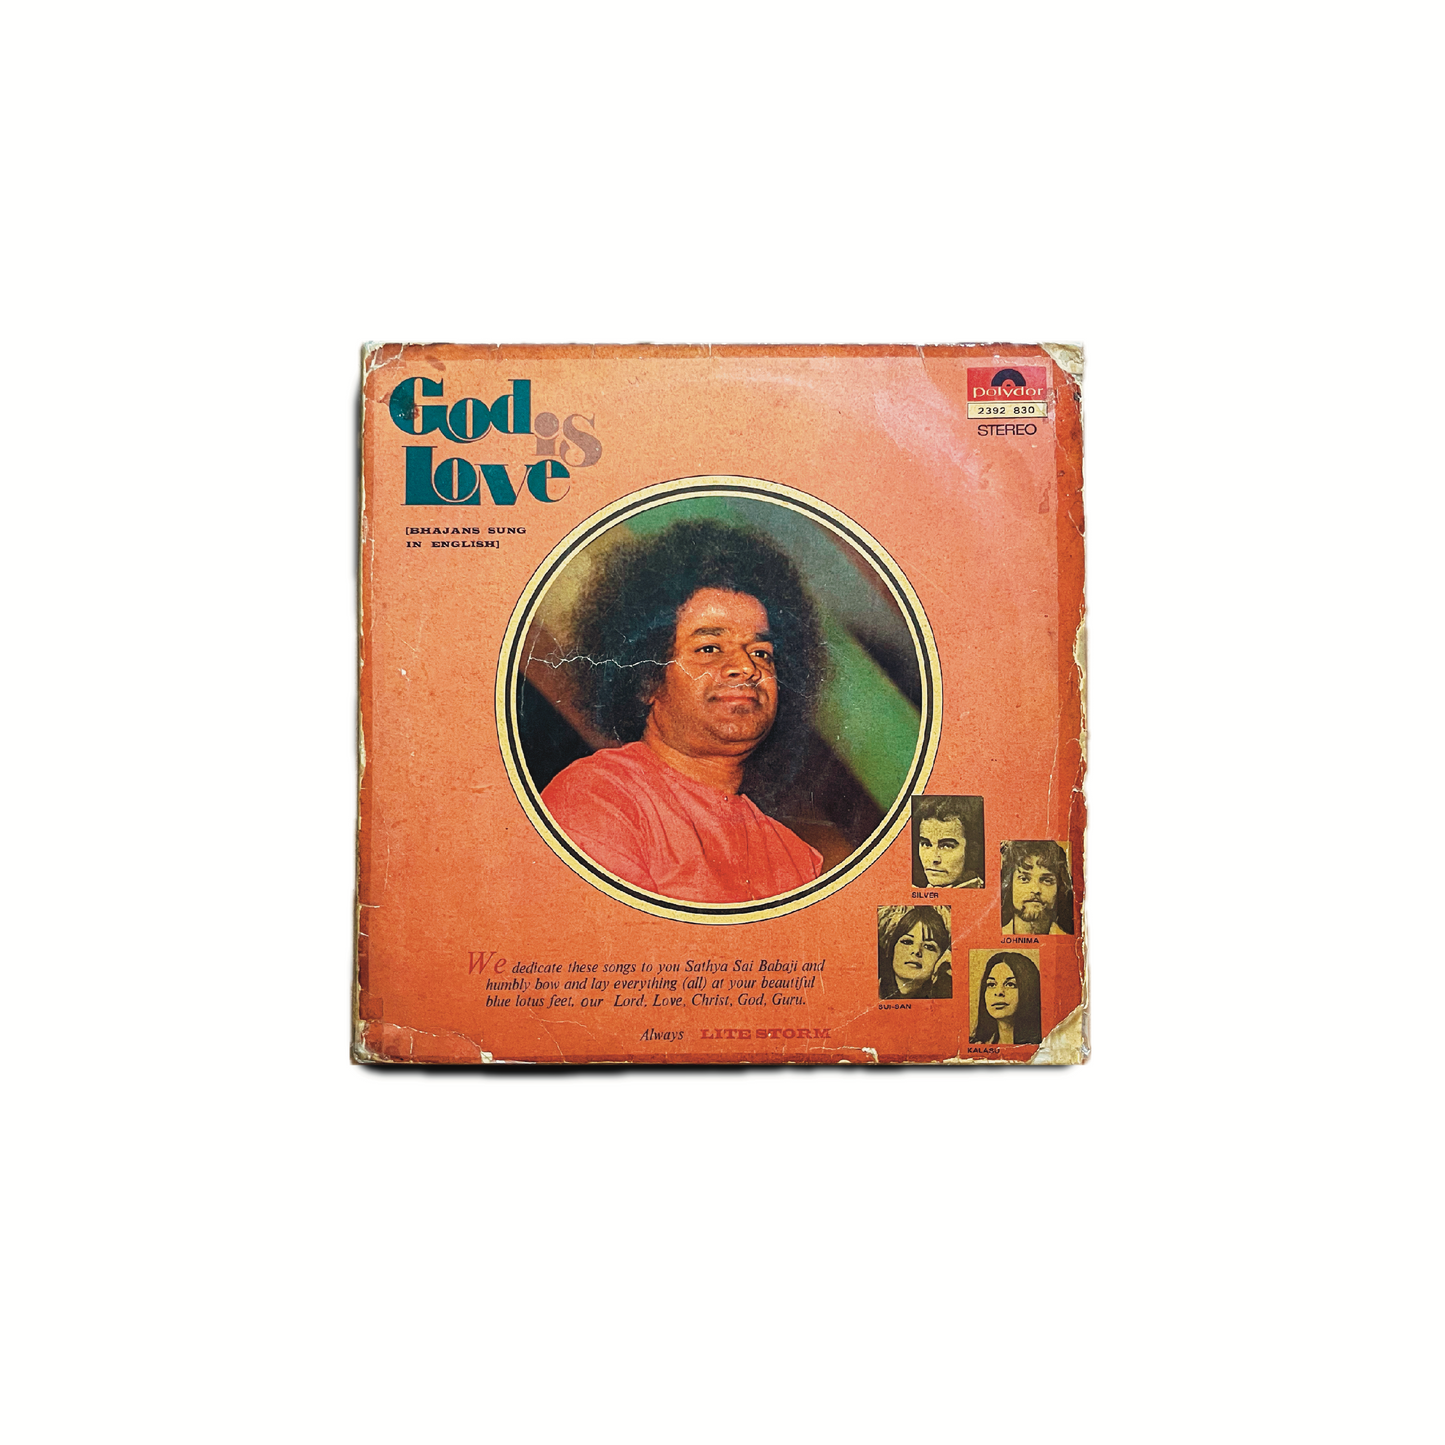 'GOD IS LOVE' - VINTAGE VINYL LP RECORD 1973